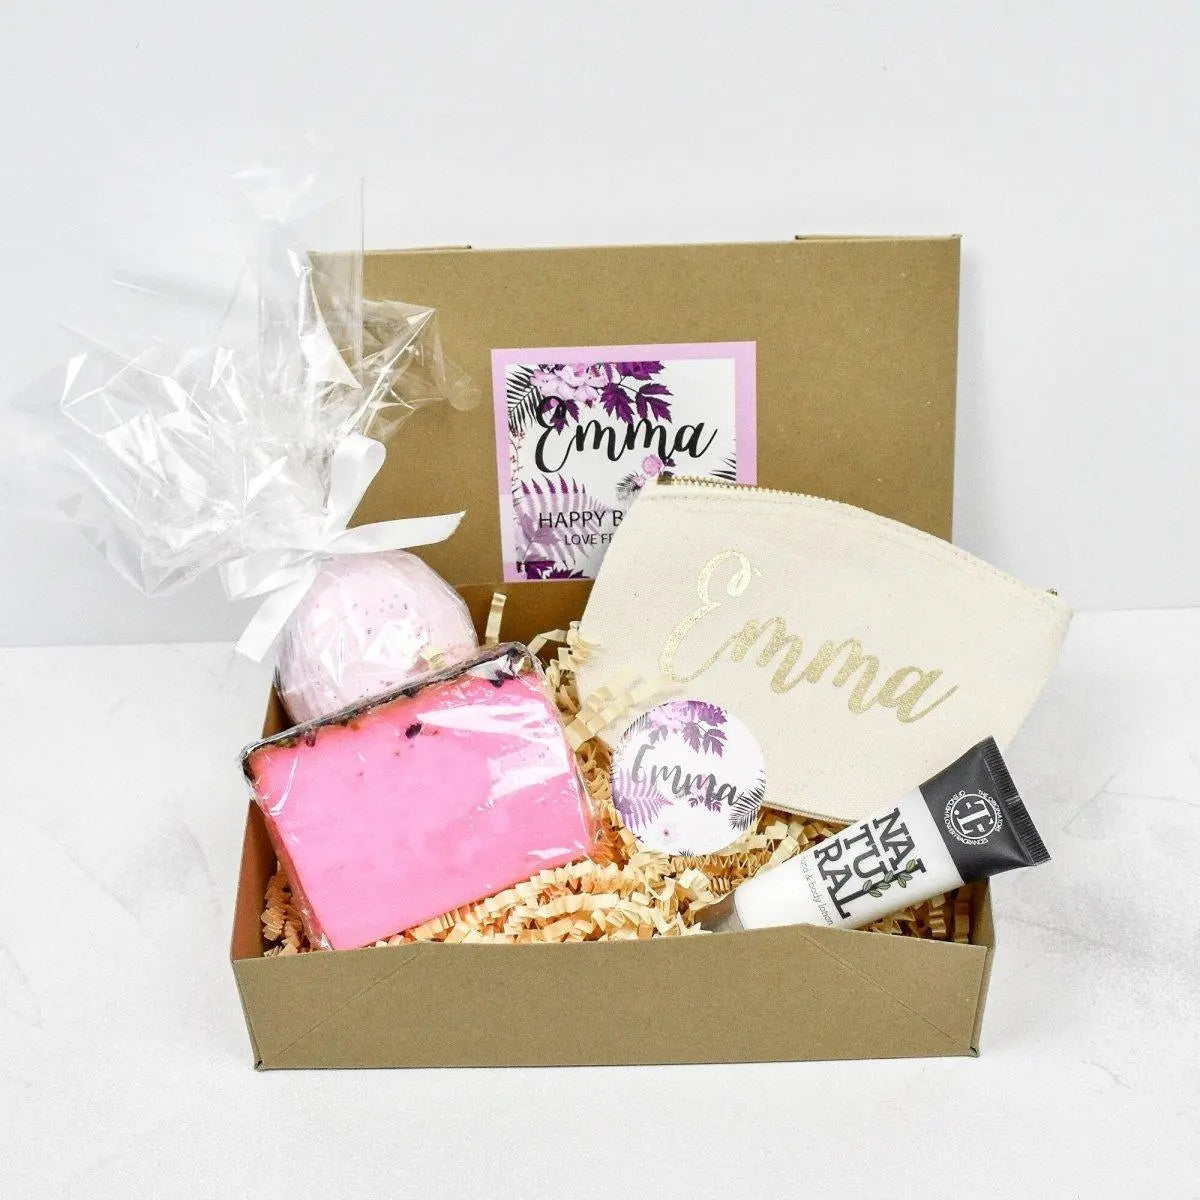 Happy Birthday Gift Box Filled, Best Friend Gift Box, Beauty Filled Gift Boxes, Spa Kits Box, Happy Birthday Gift, Boxed Gifts, Bath Bomb, - Amy Lucy